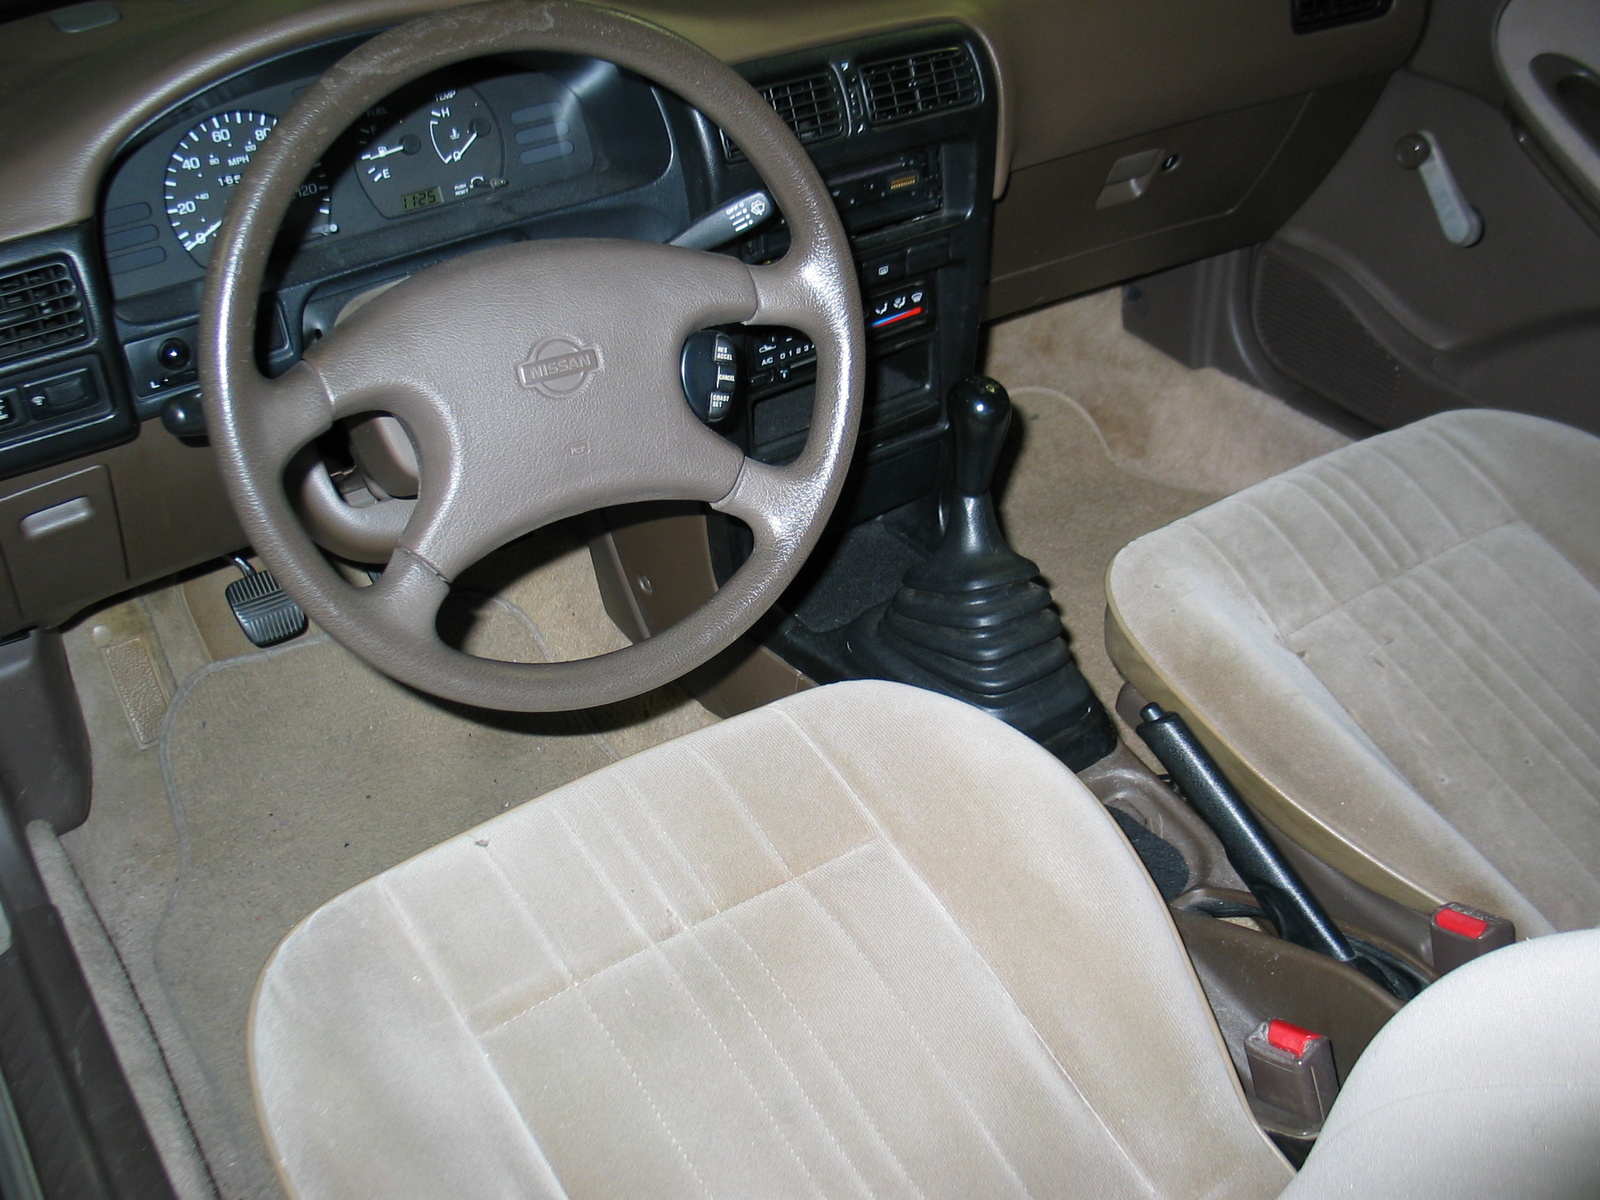 1994 Nissan sentra seats